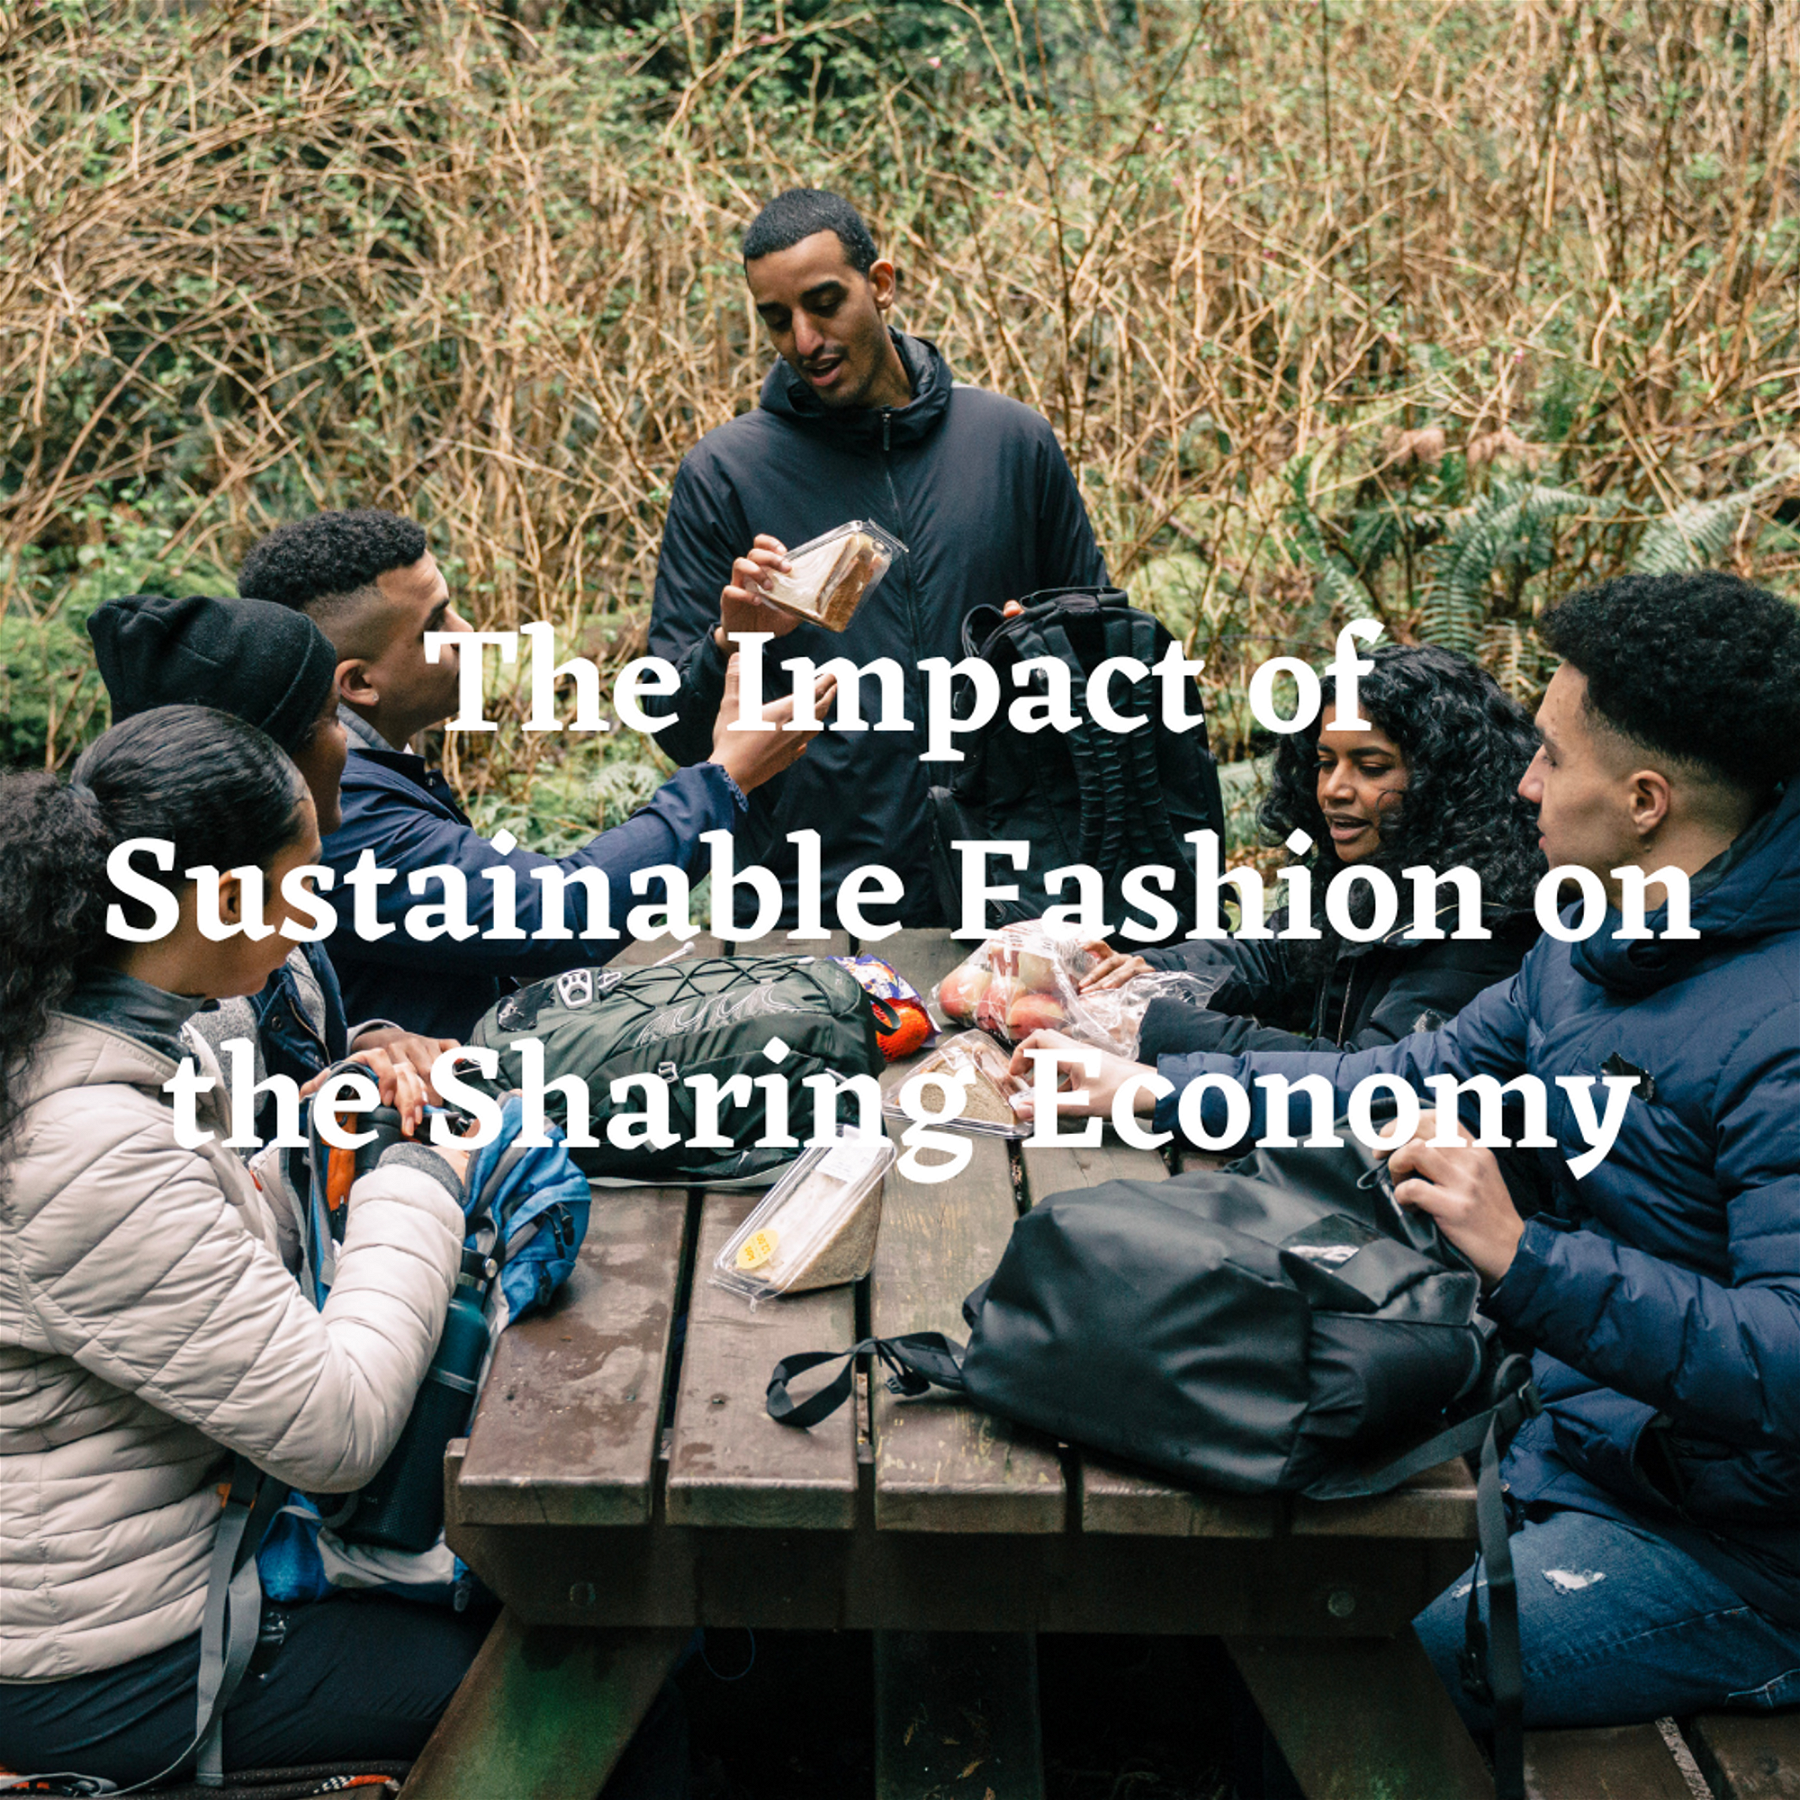 The Impact of Sustainable Fashion on the Sharing Economy